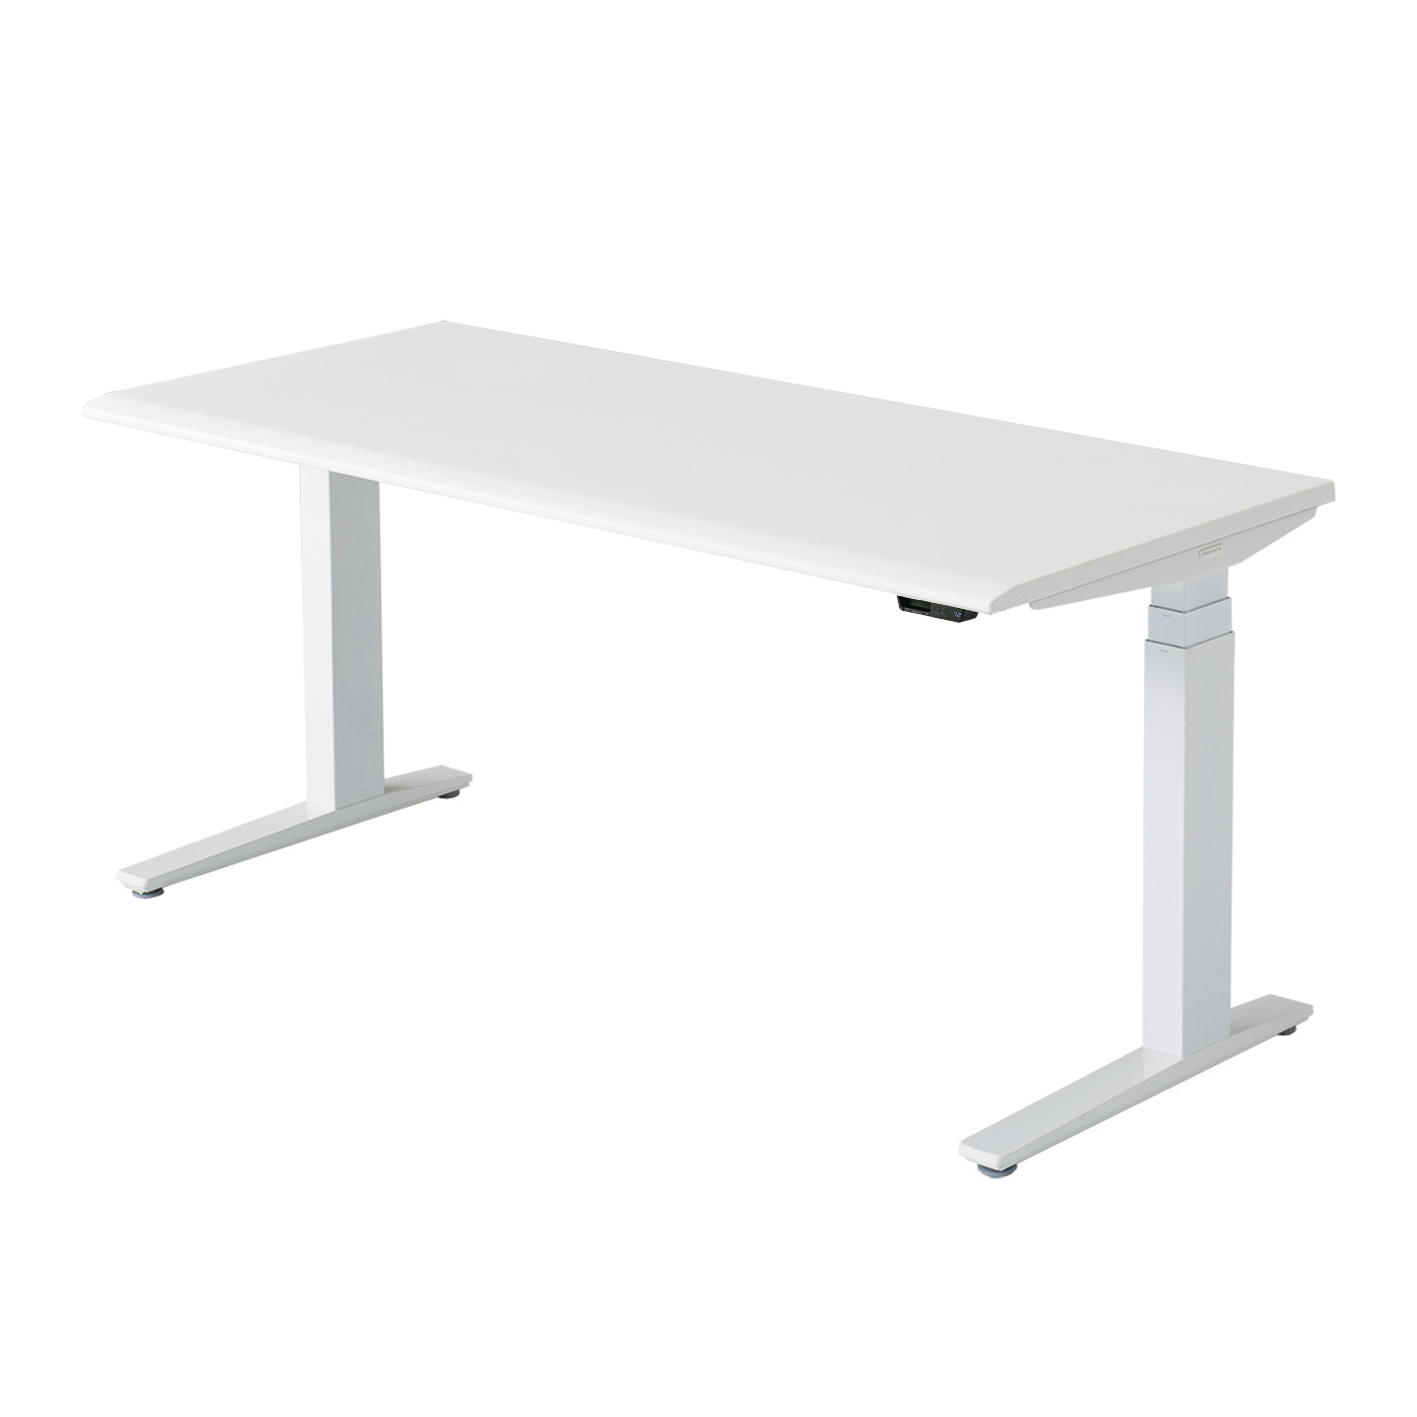 White work table